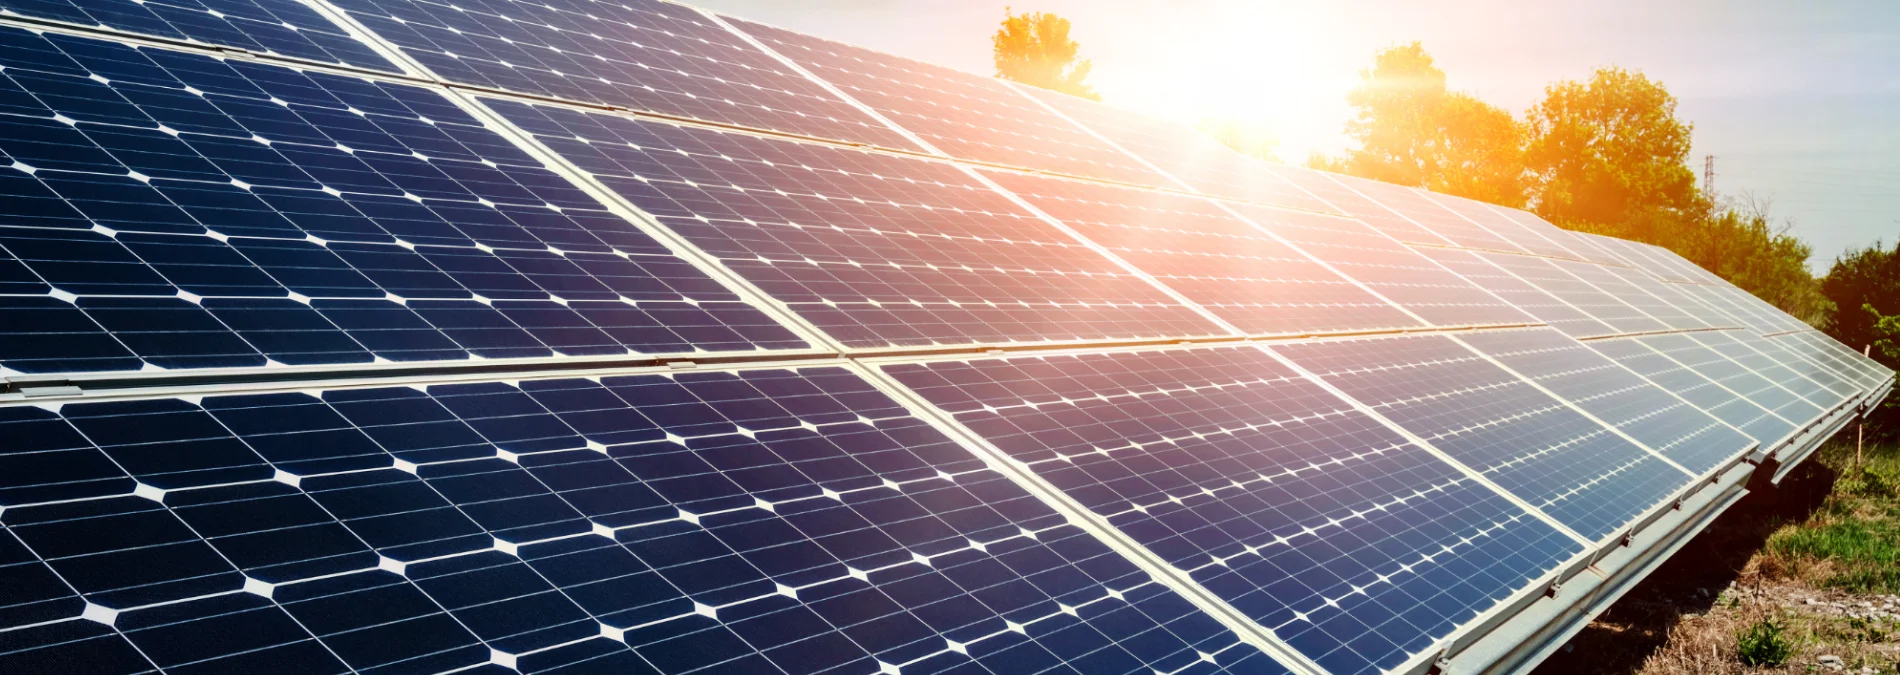 Video: Solar energy – power of the sun for clean energy